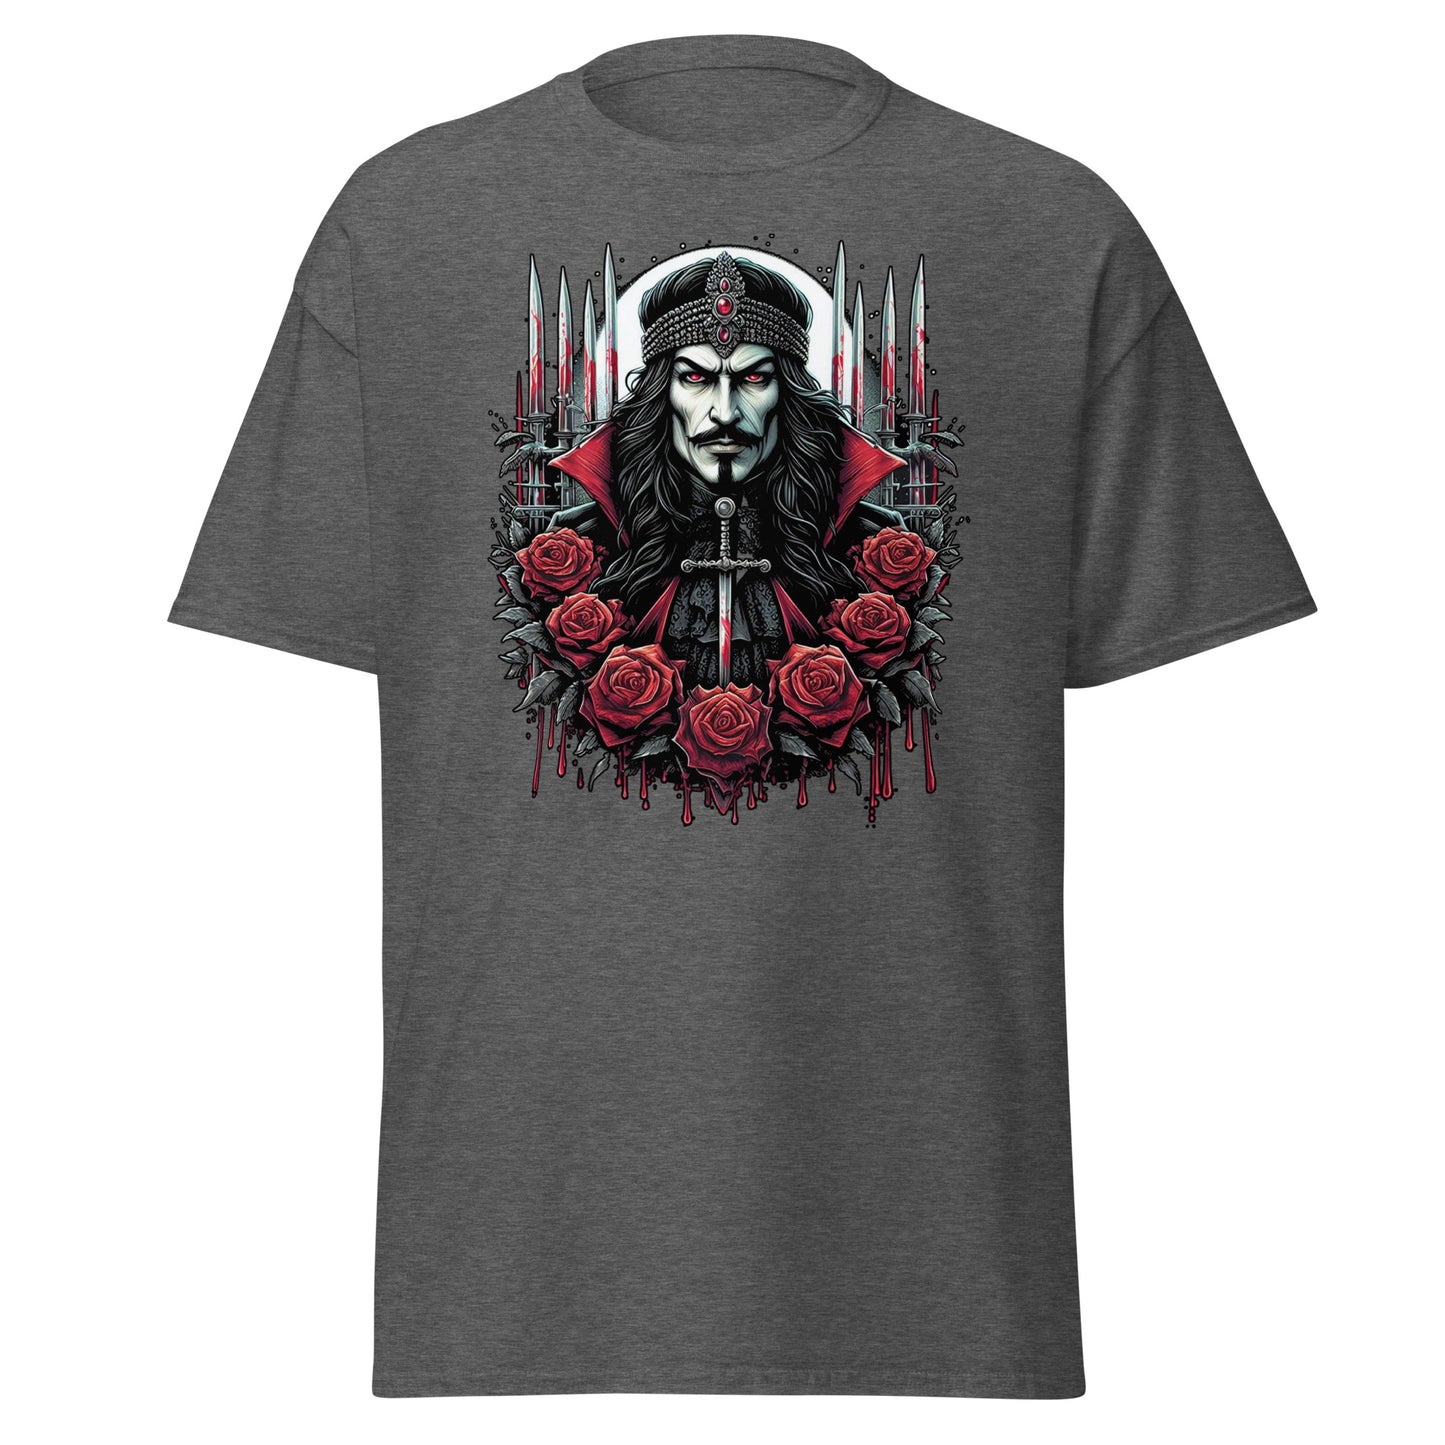 Vlad the Impaler: Dracula's Legacy T-Shirt - Bloodline Edition